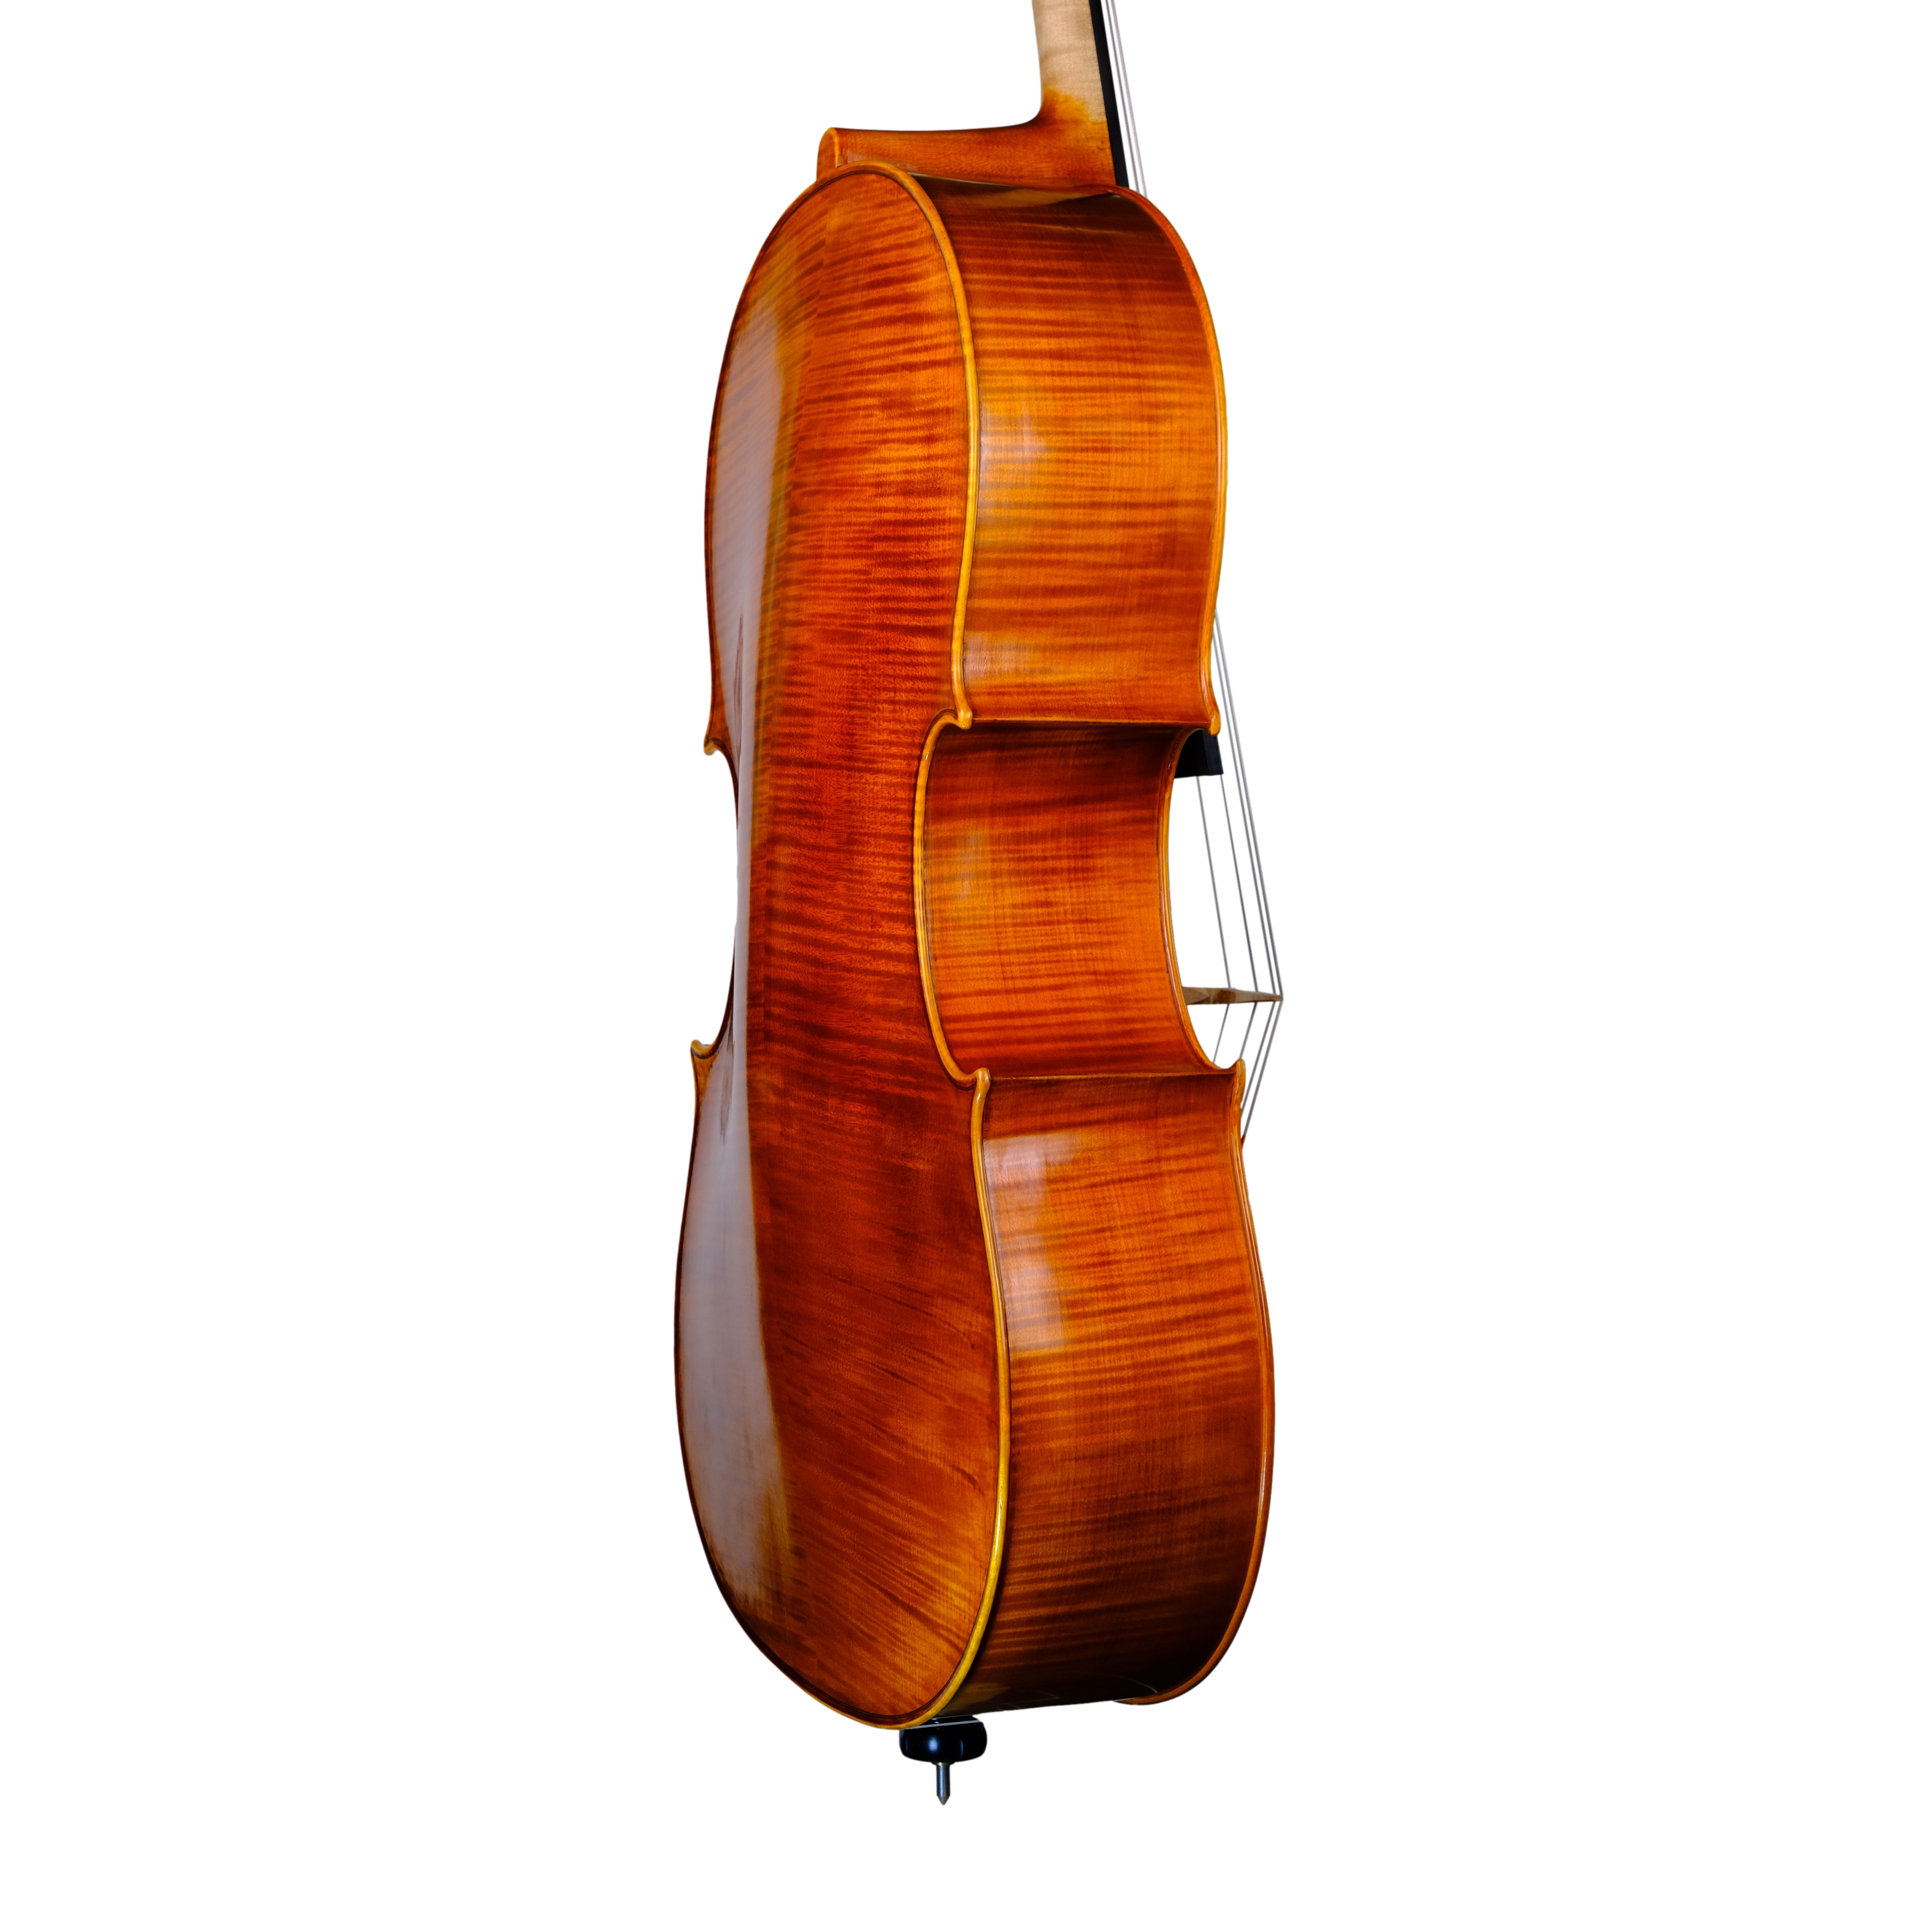 Cello - Linea Macchi, Domenico Montagnana "Sleeping Beauty", Cremona 2022